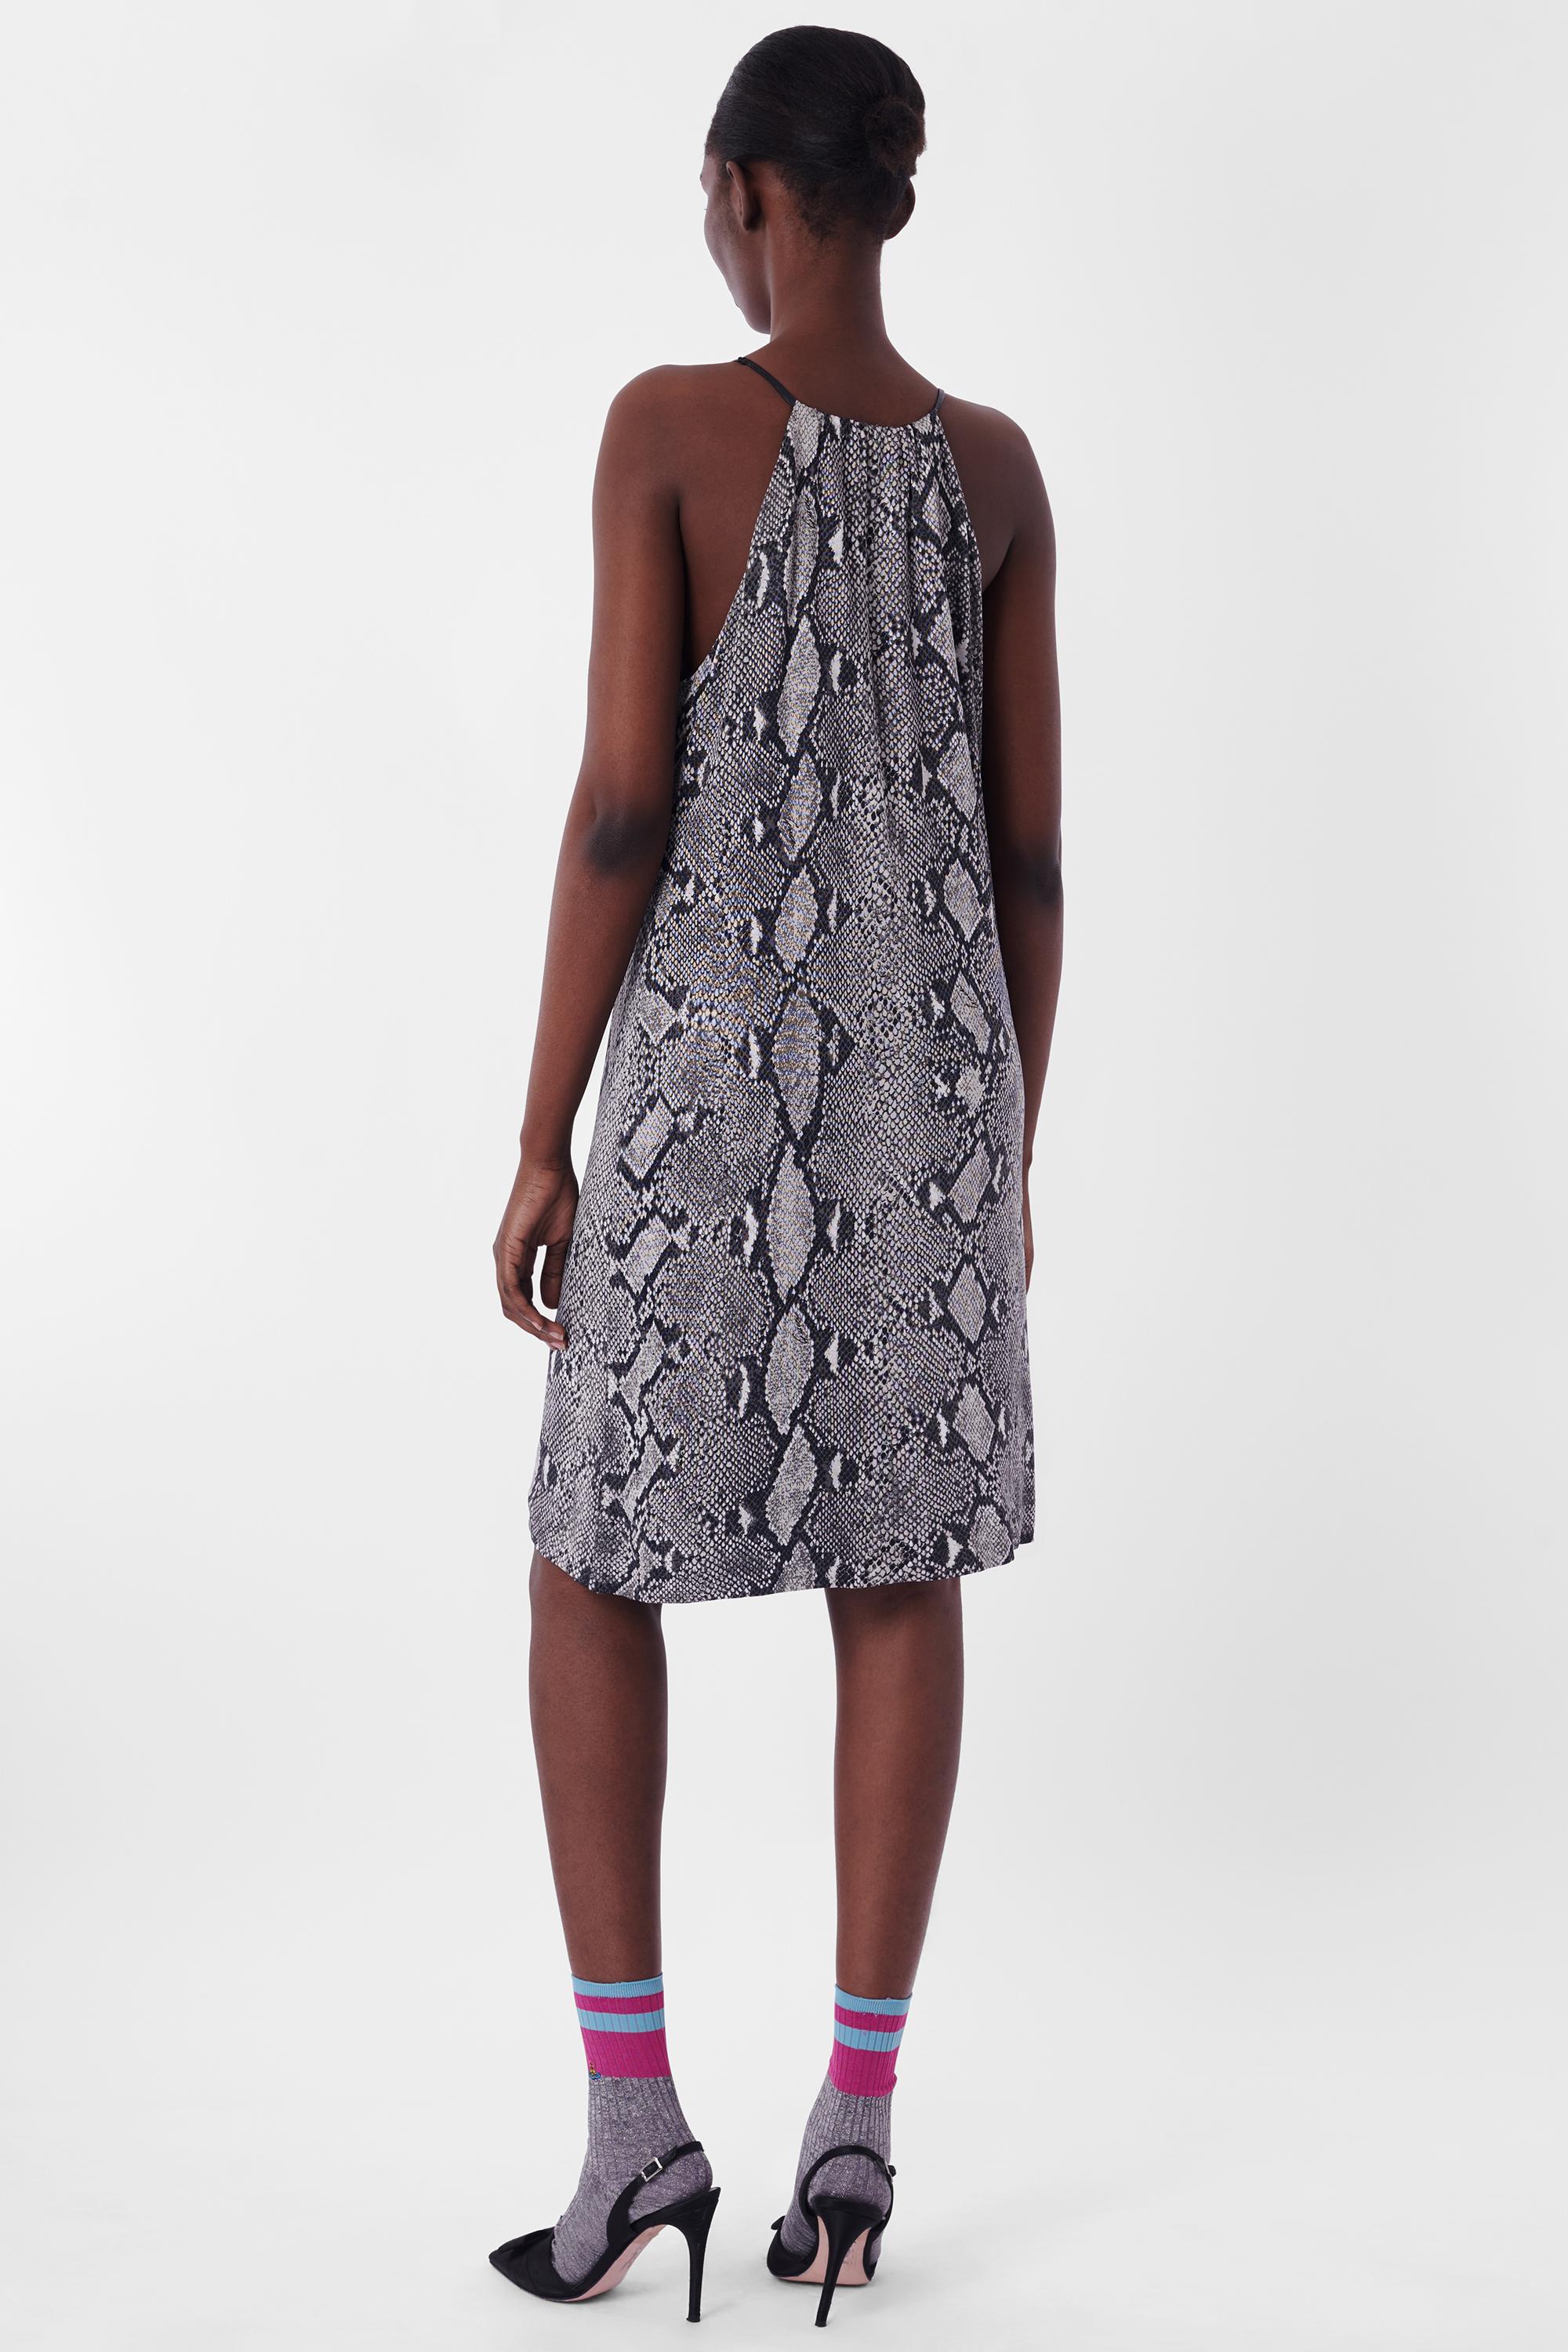 Gray Gucci S/S 2000 Python Print Mini Dress For Sale